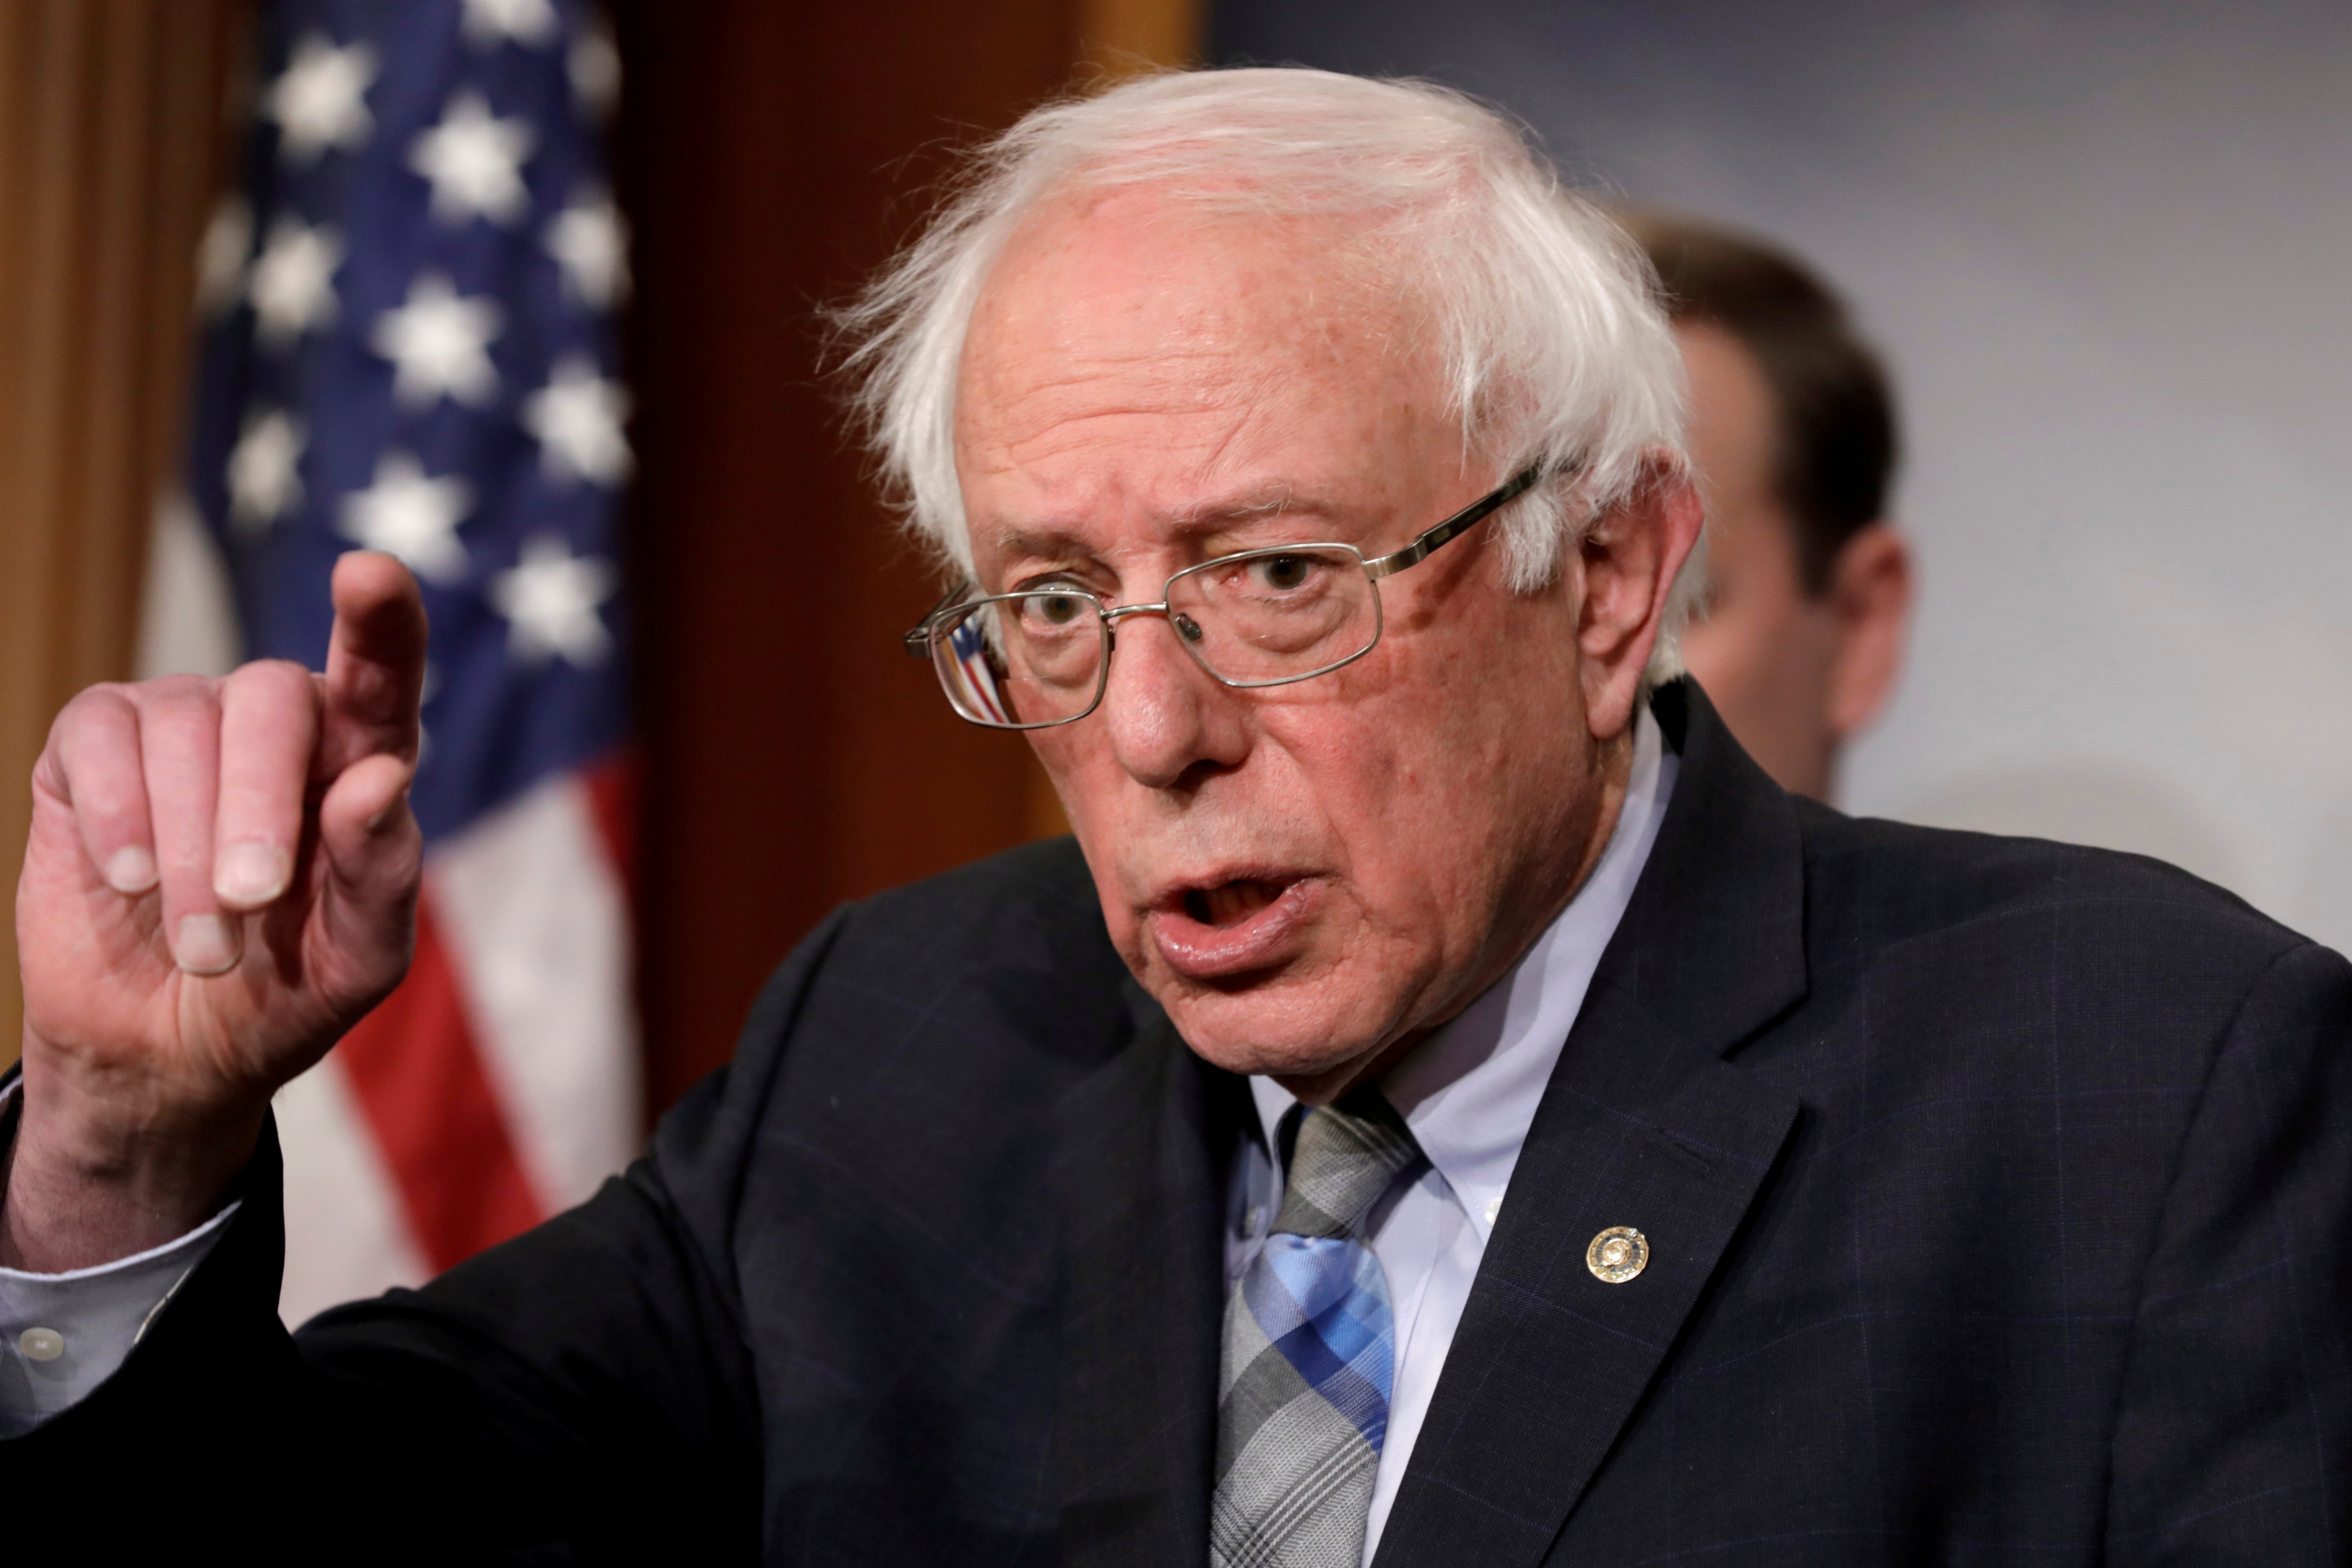 Senator Bernie Sanders speaks during a news conference on Yemen resolution